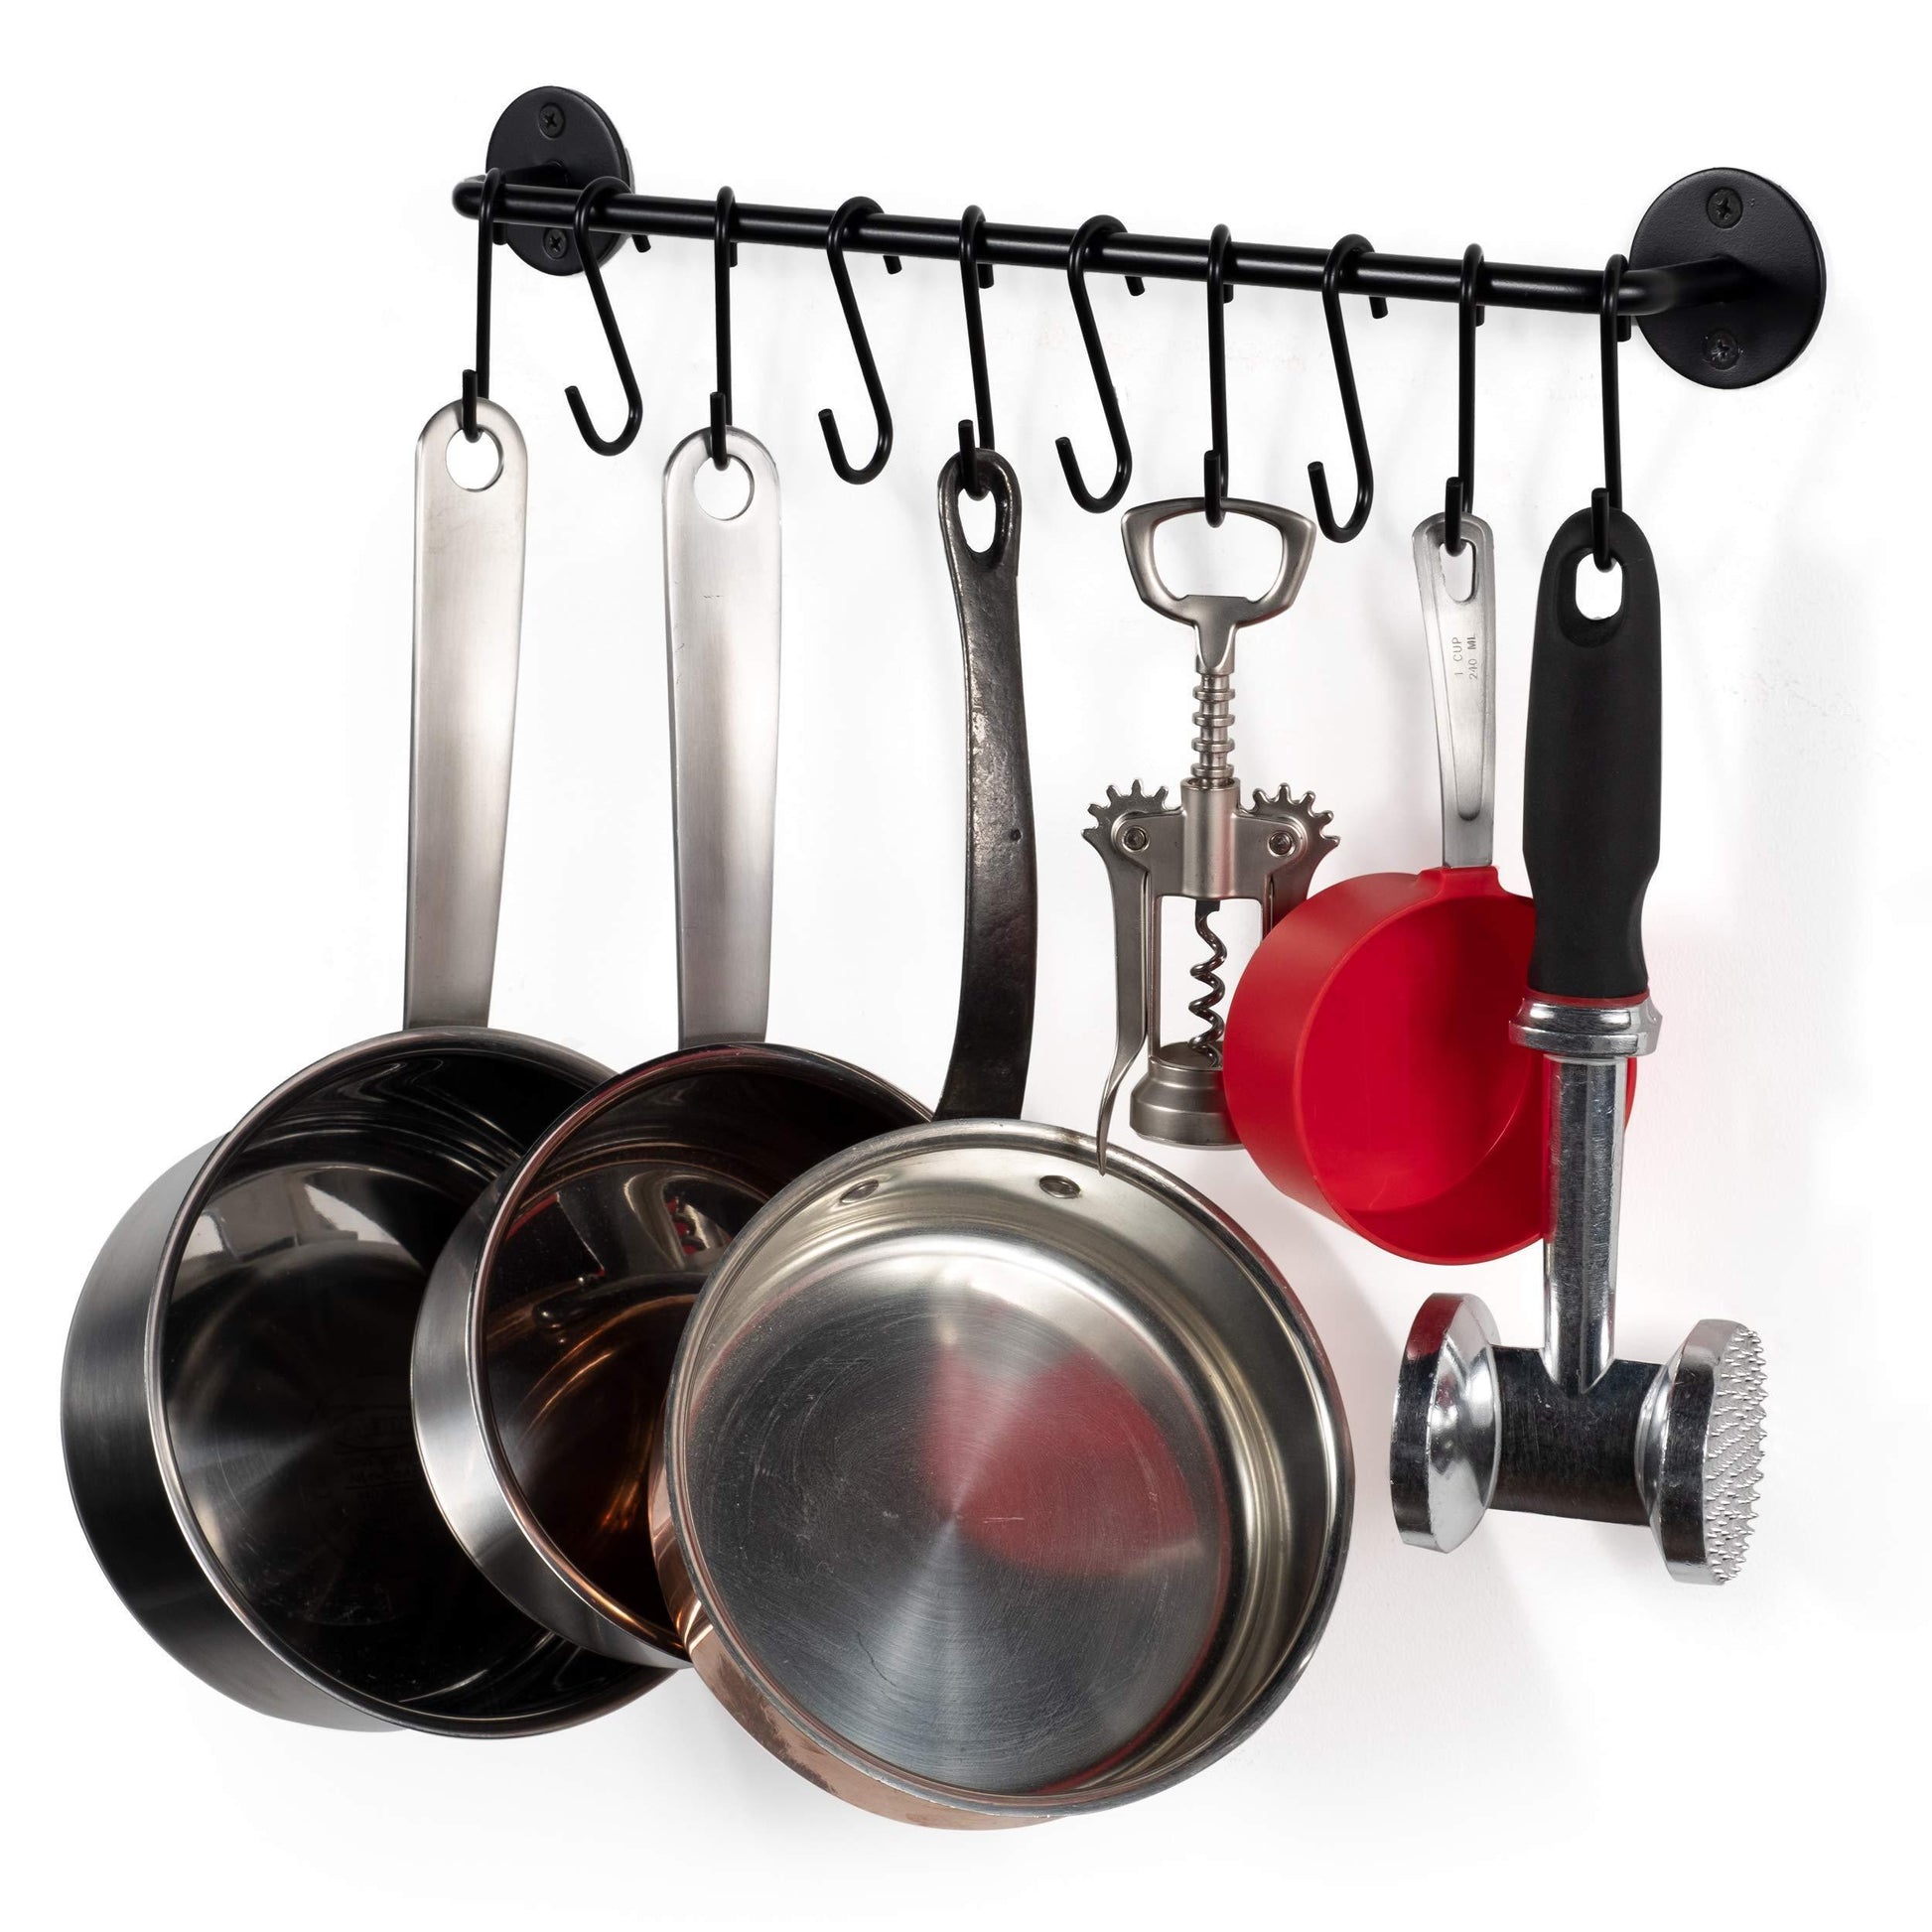 Buy now wallniture gourmet kitchen rail rack pot pan lid organizer and 10 hooks 16 inch black